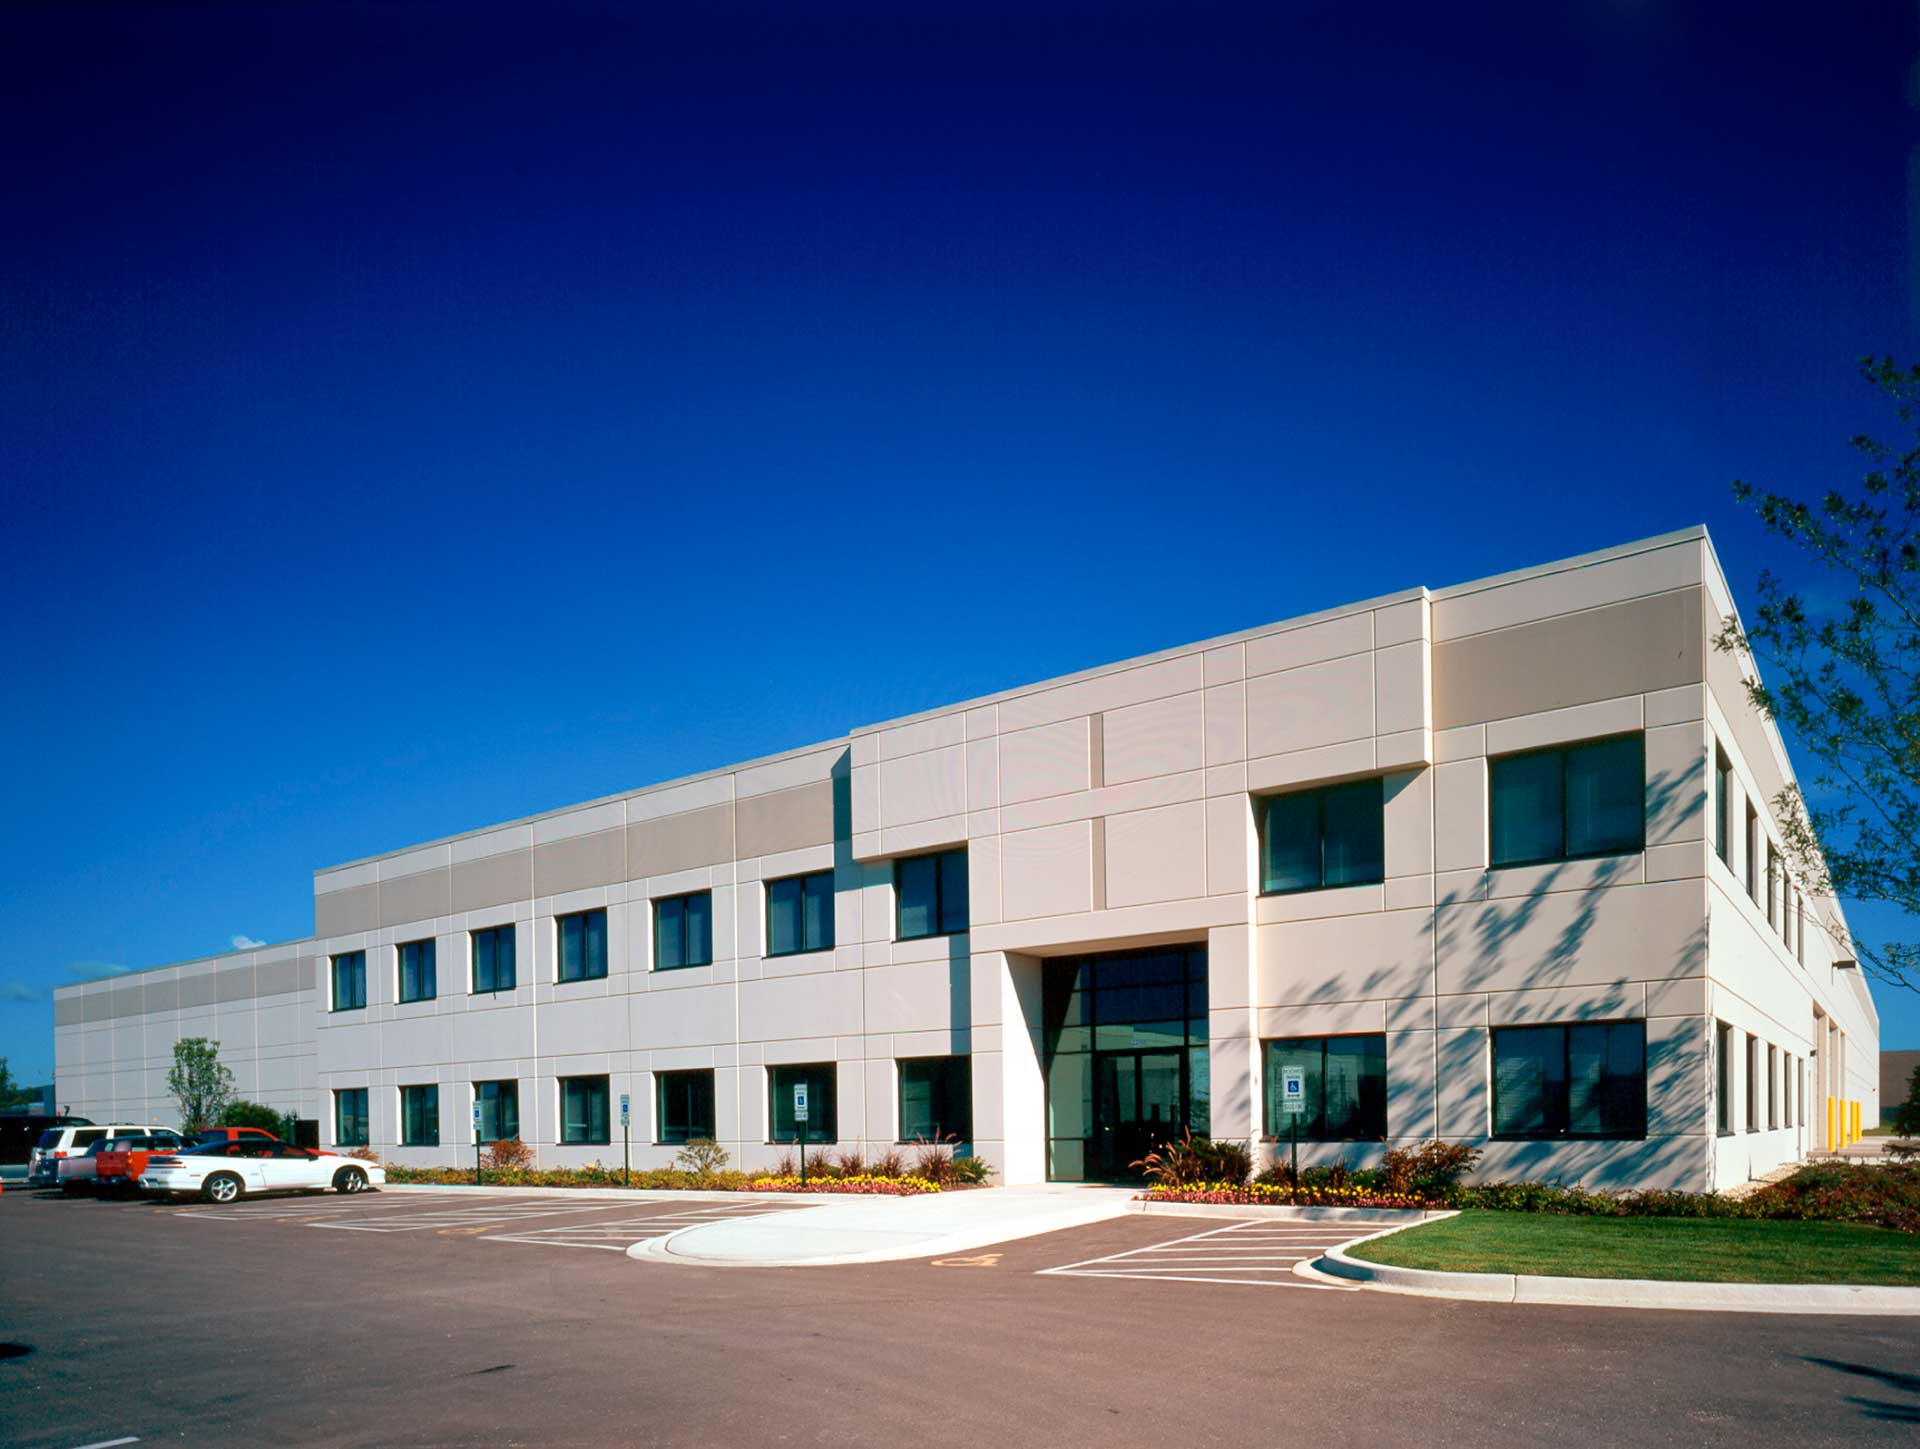 Exterior of Joseph Mullarkey Distributors corporate headquarters and distribution facility